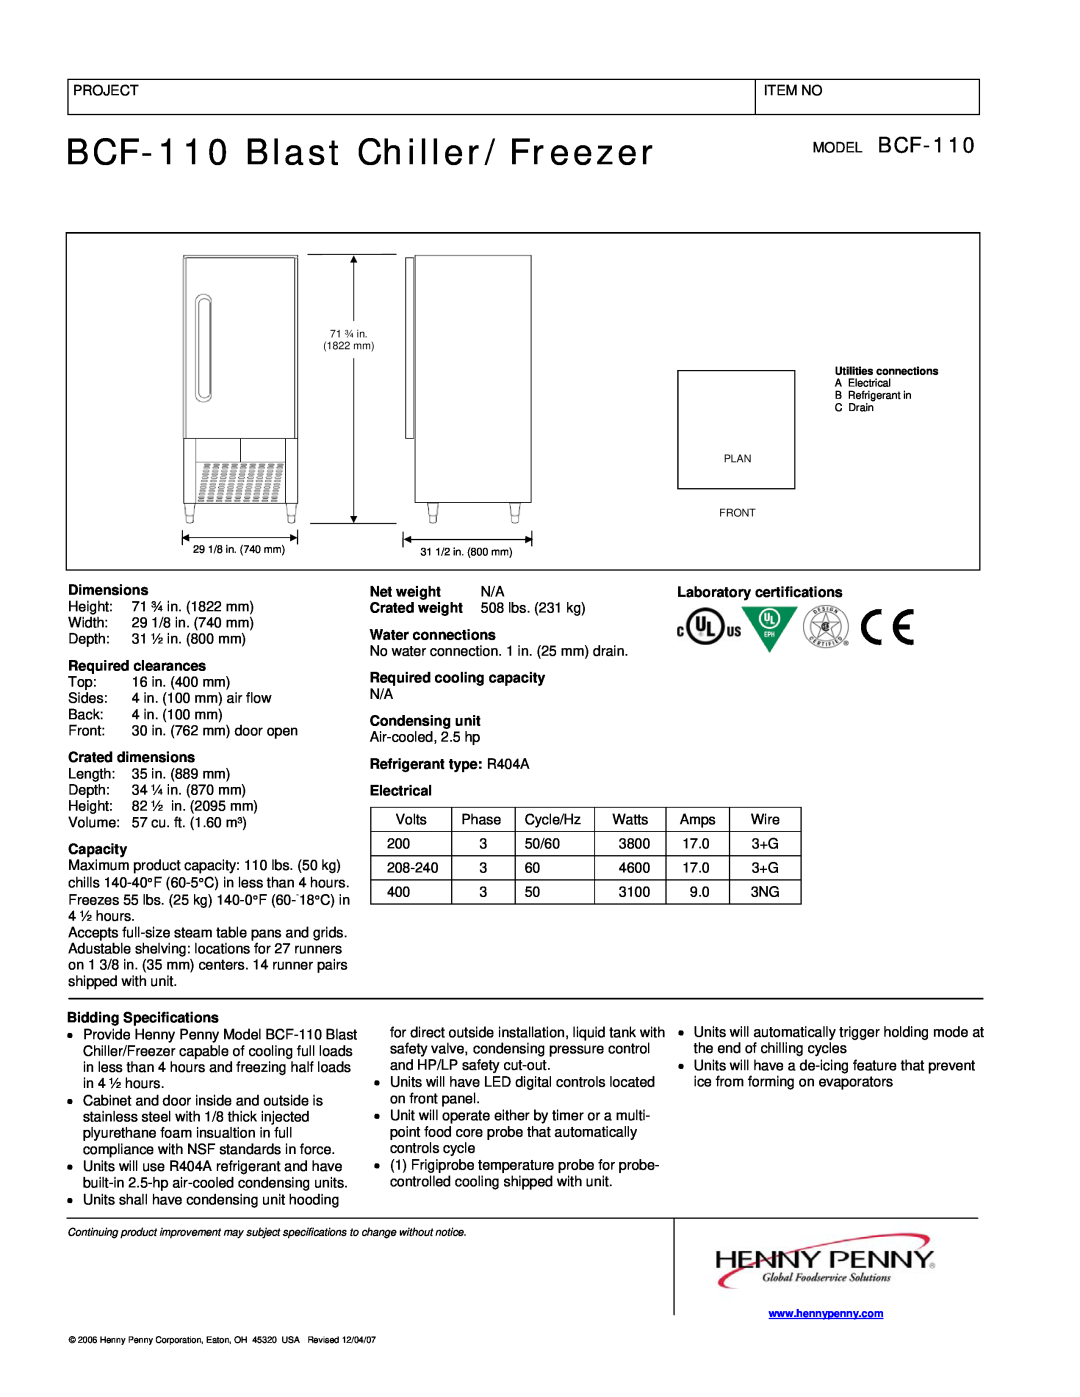 Henny Penny manual BCF-110Blast Chiller/Freezer, MODEL BCF-110, Dimensions 